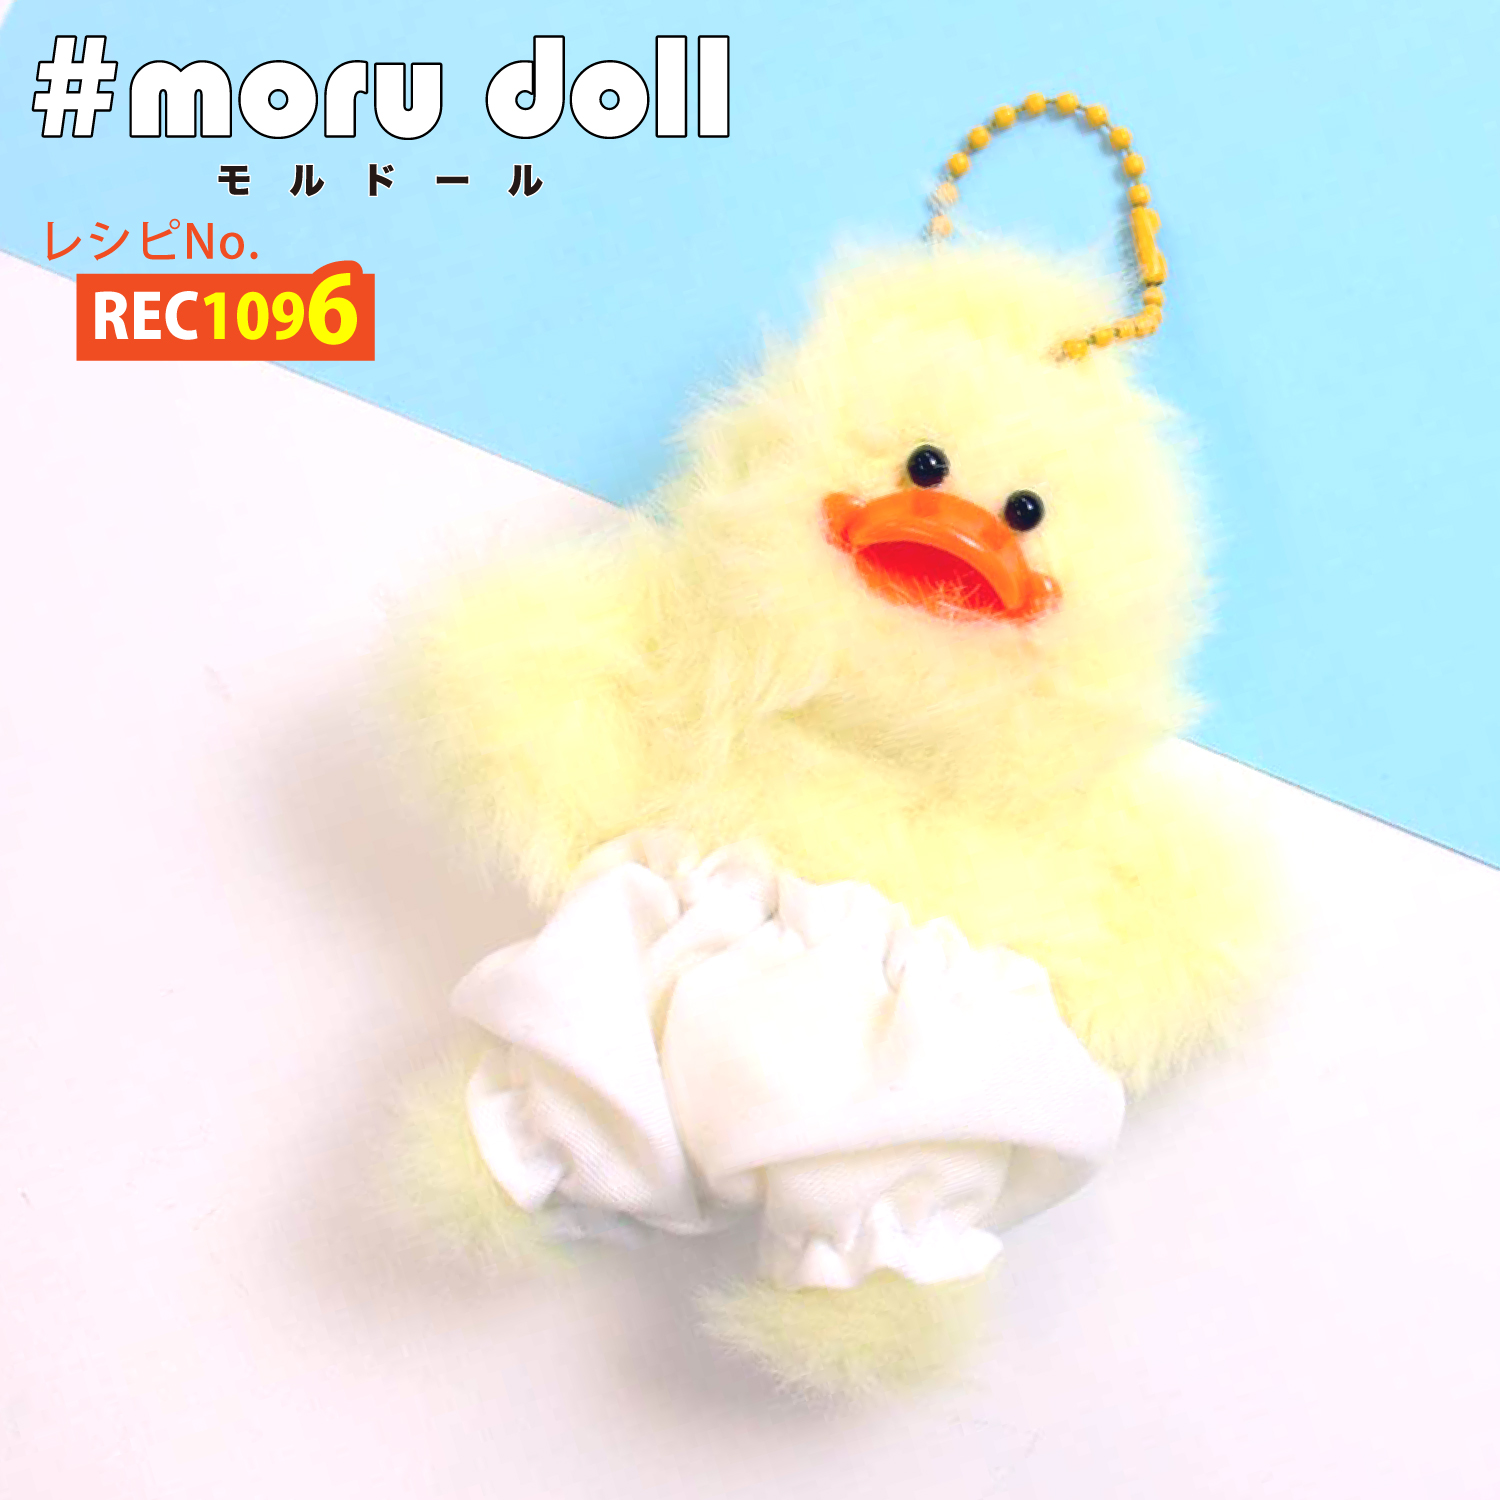 REC1096 mall doll Korean miscellaneous goods Recipe (pcs)